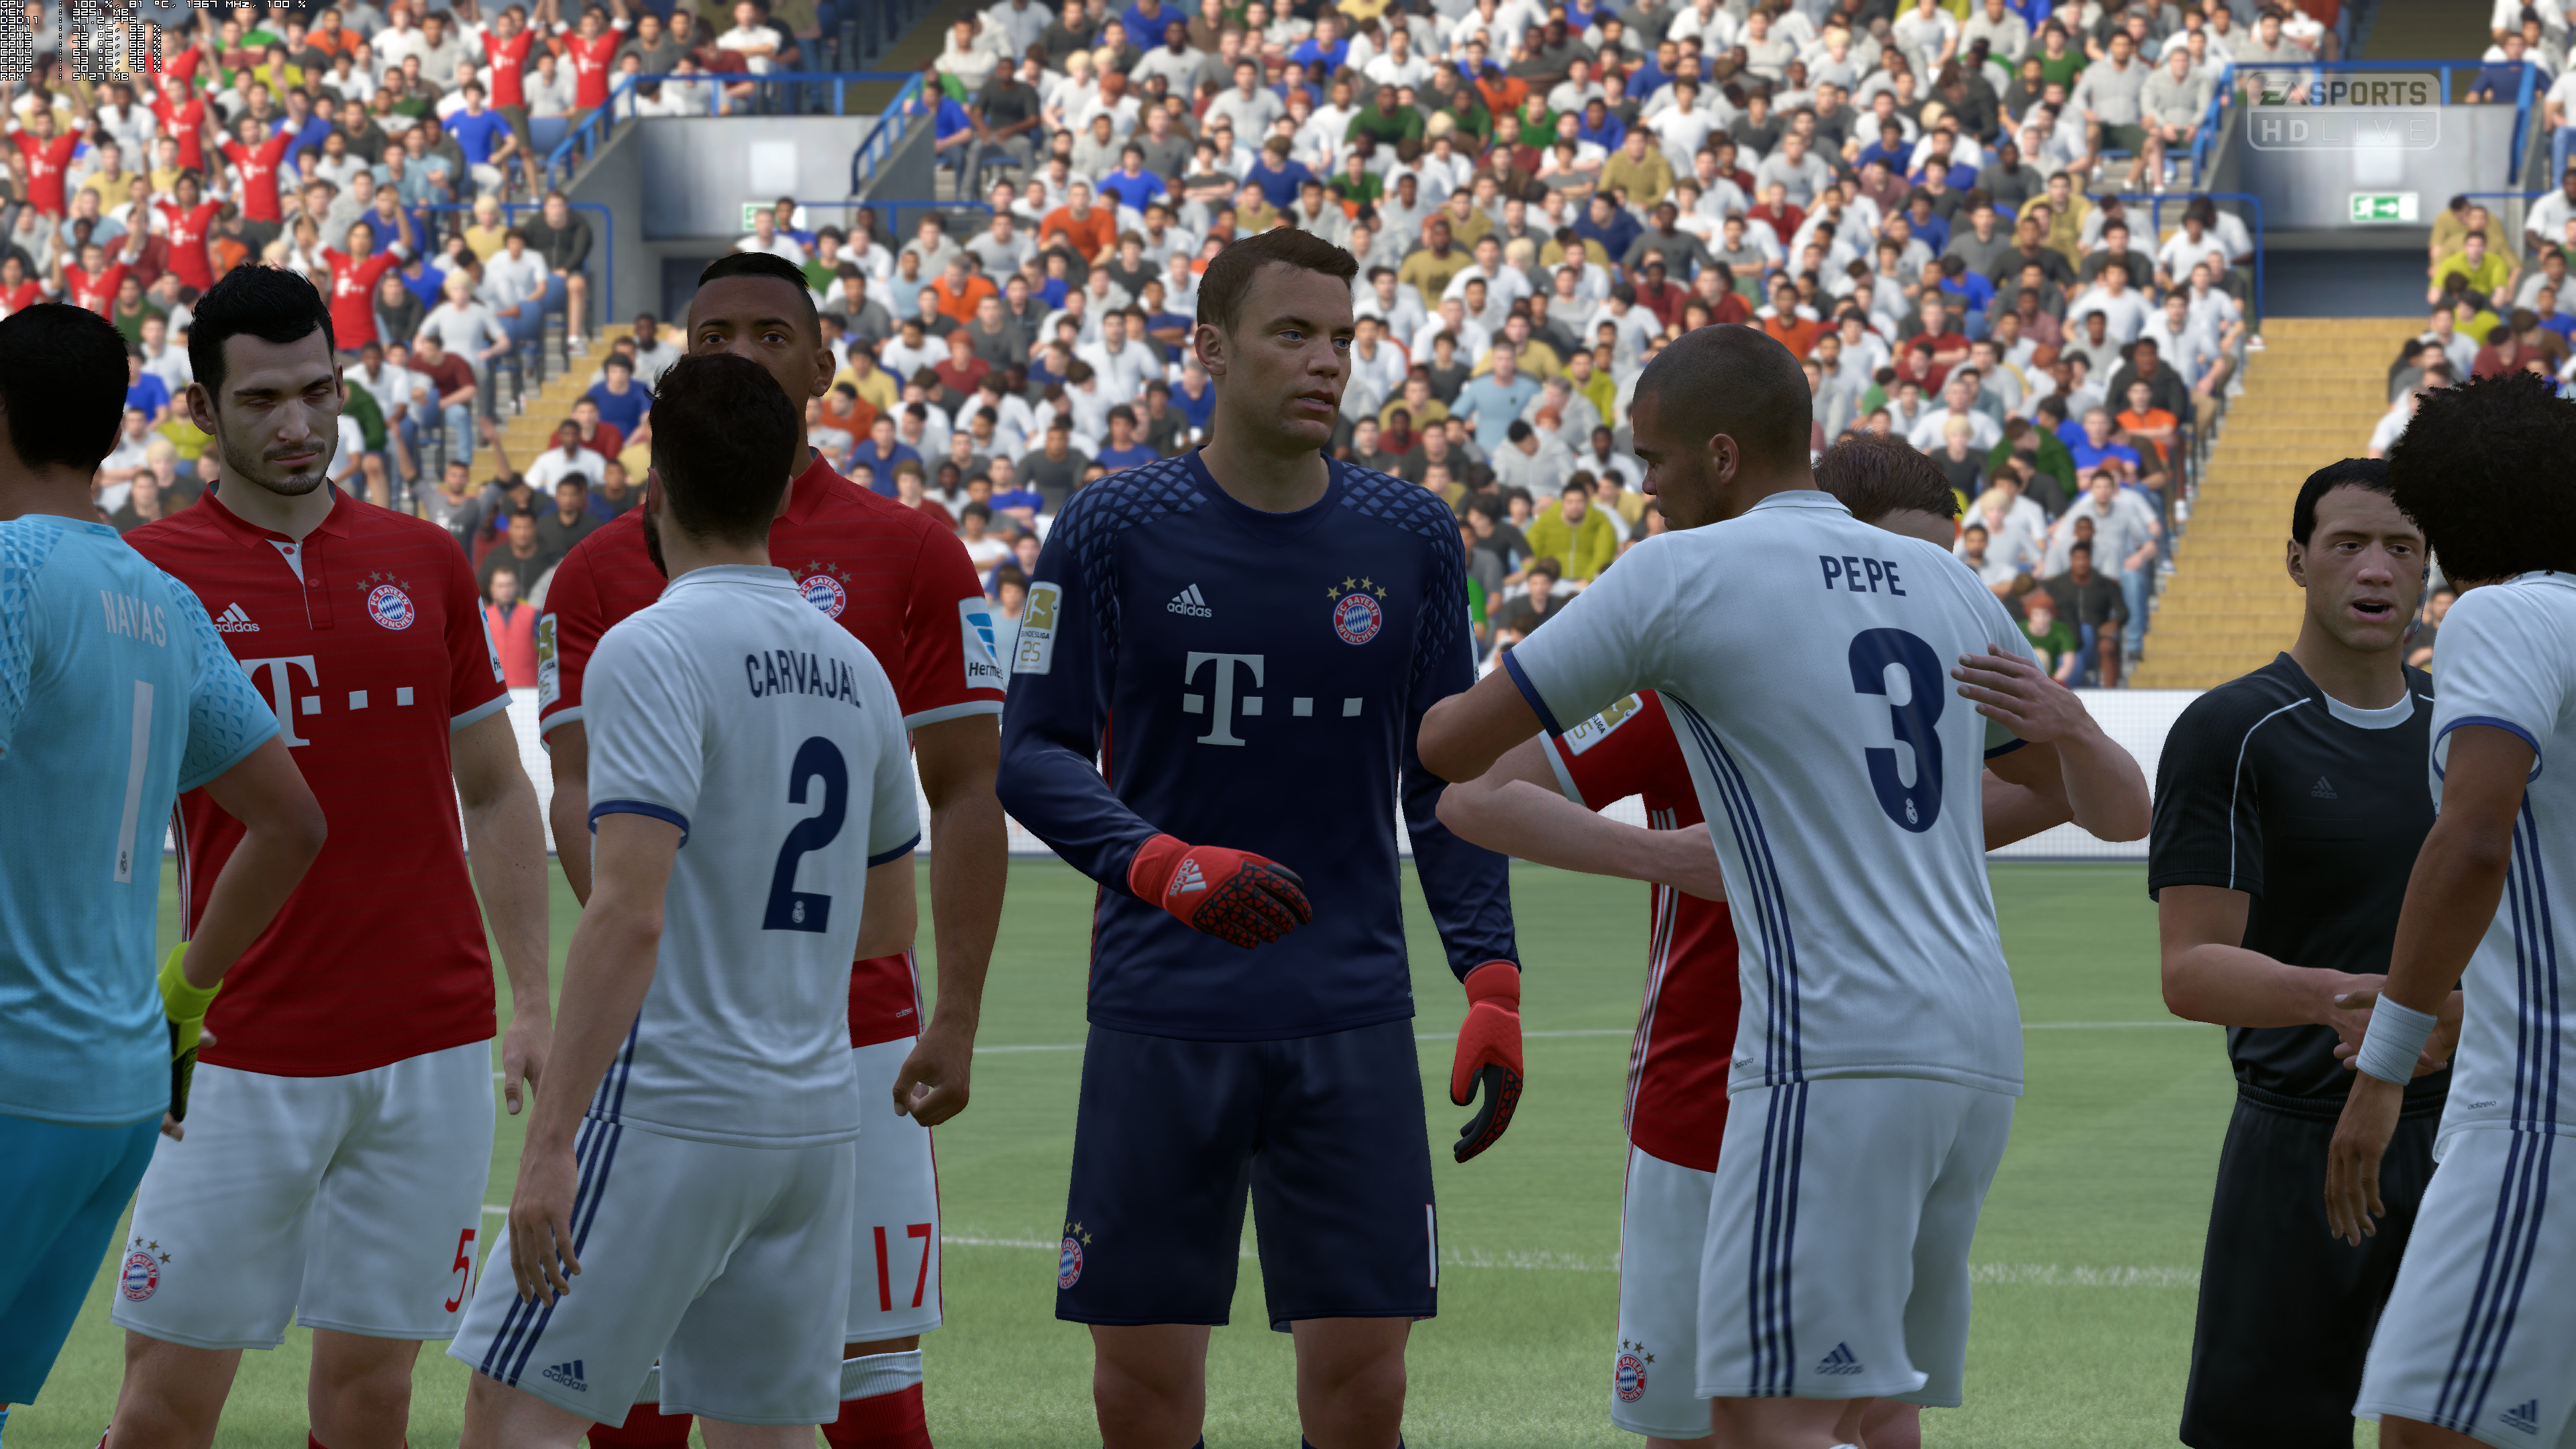 FIFA 17 [Origin/EA app] с гарантией ✅ | offline